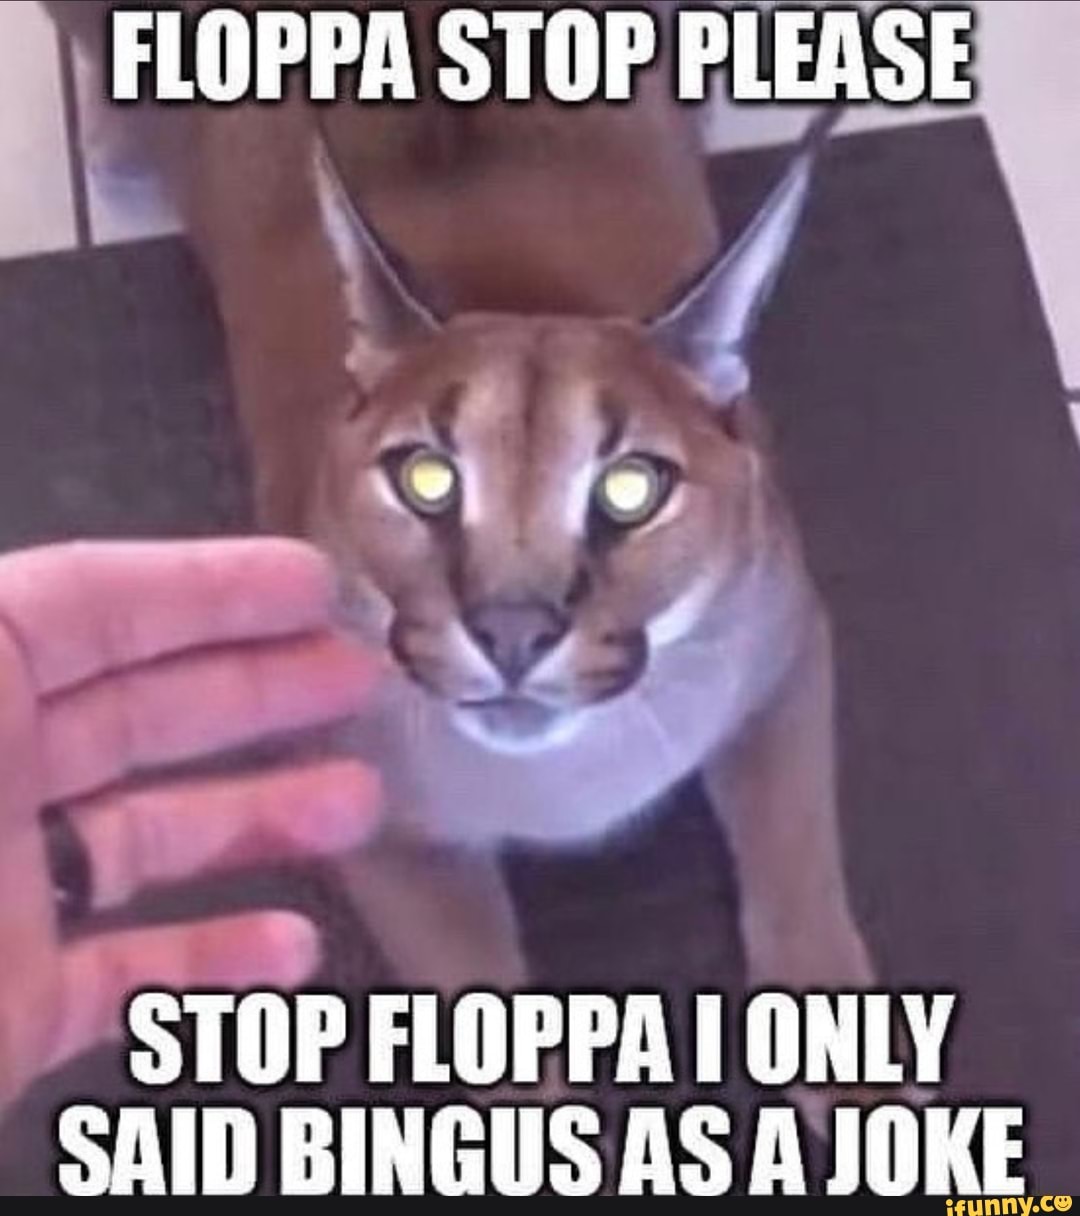 FLOPPA FRIDAY  Memes, Cat memes, Funny animal jokes